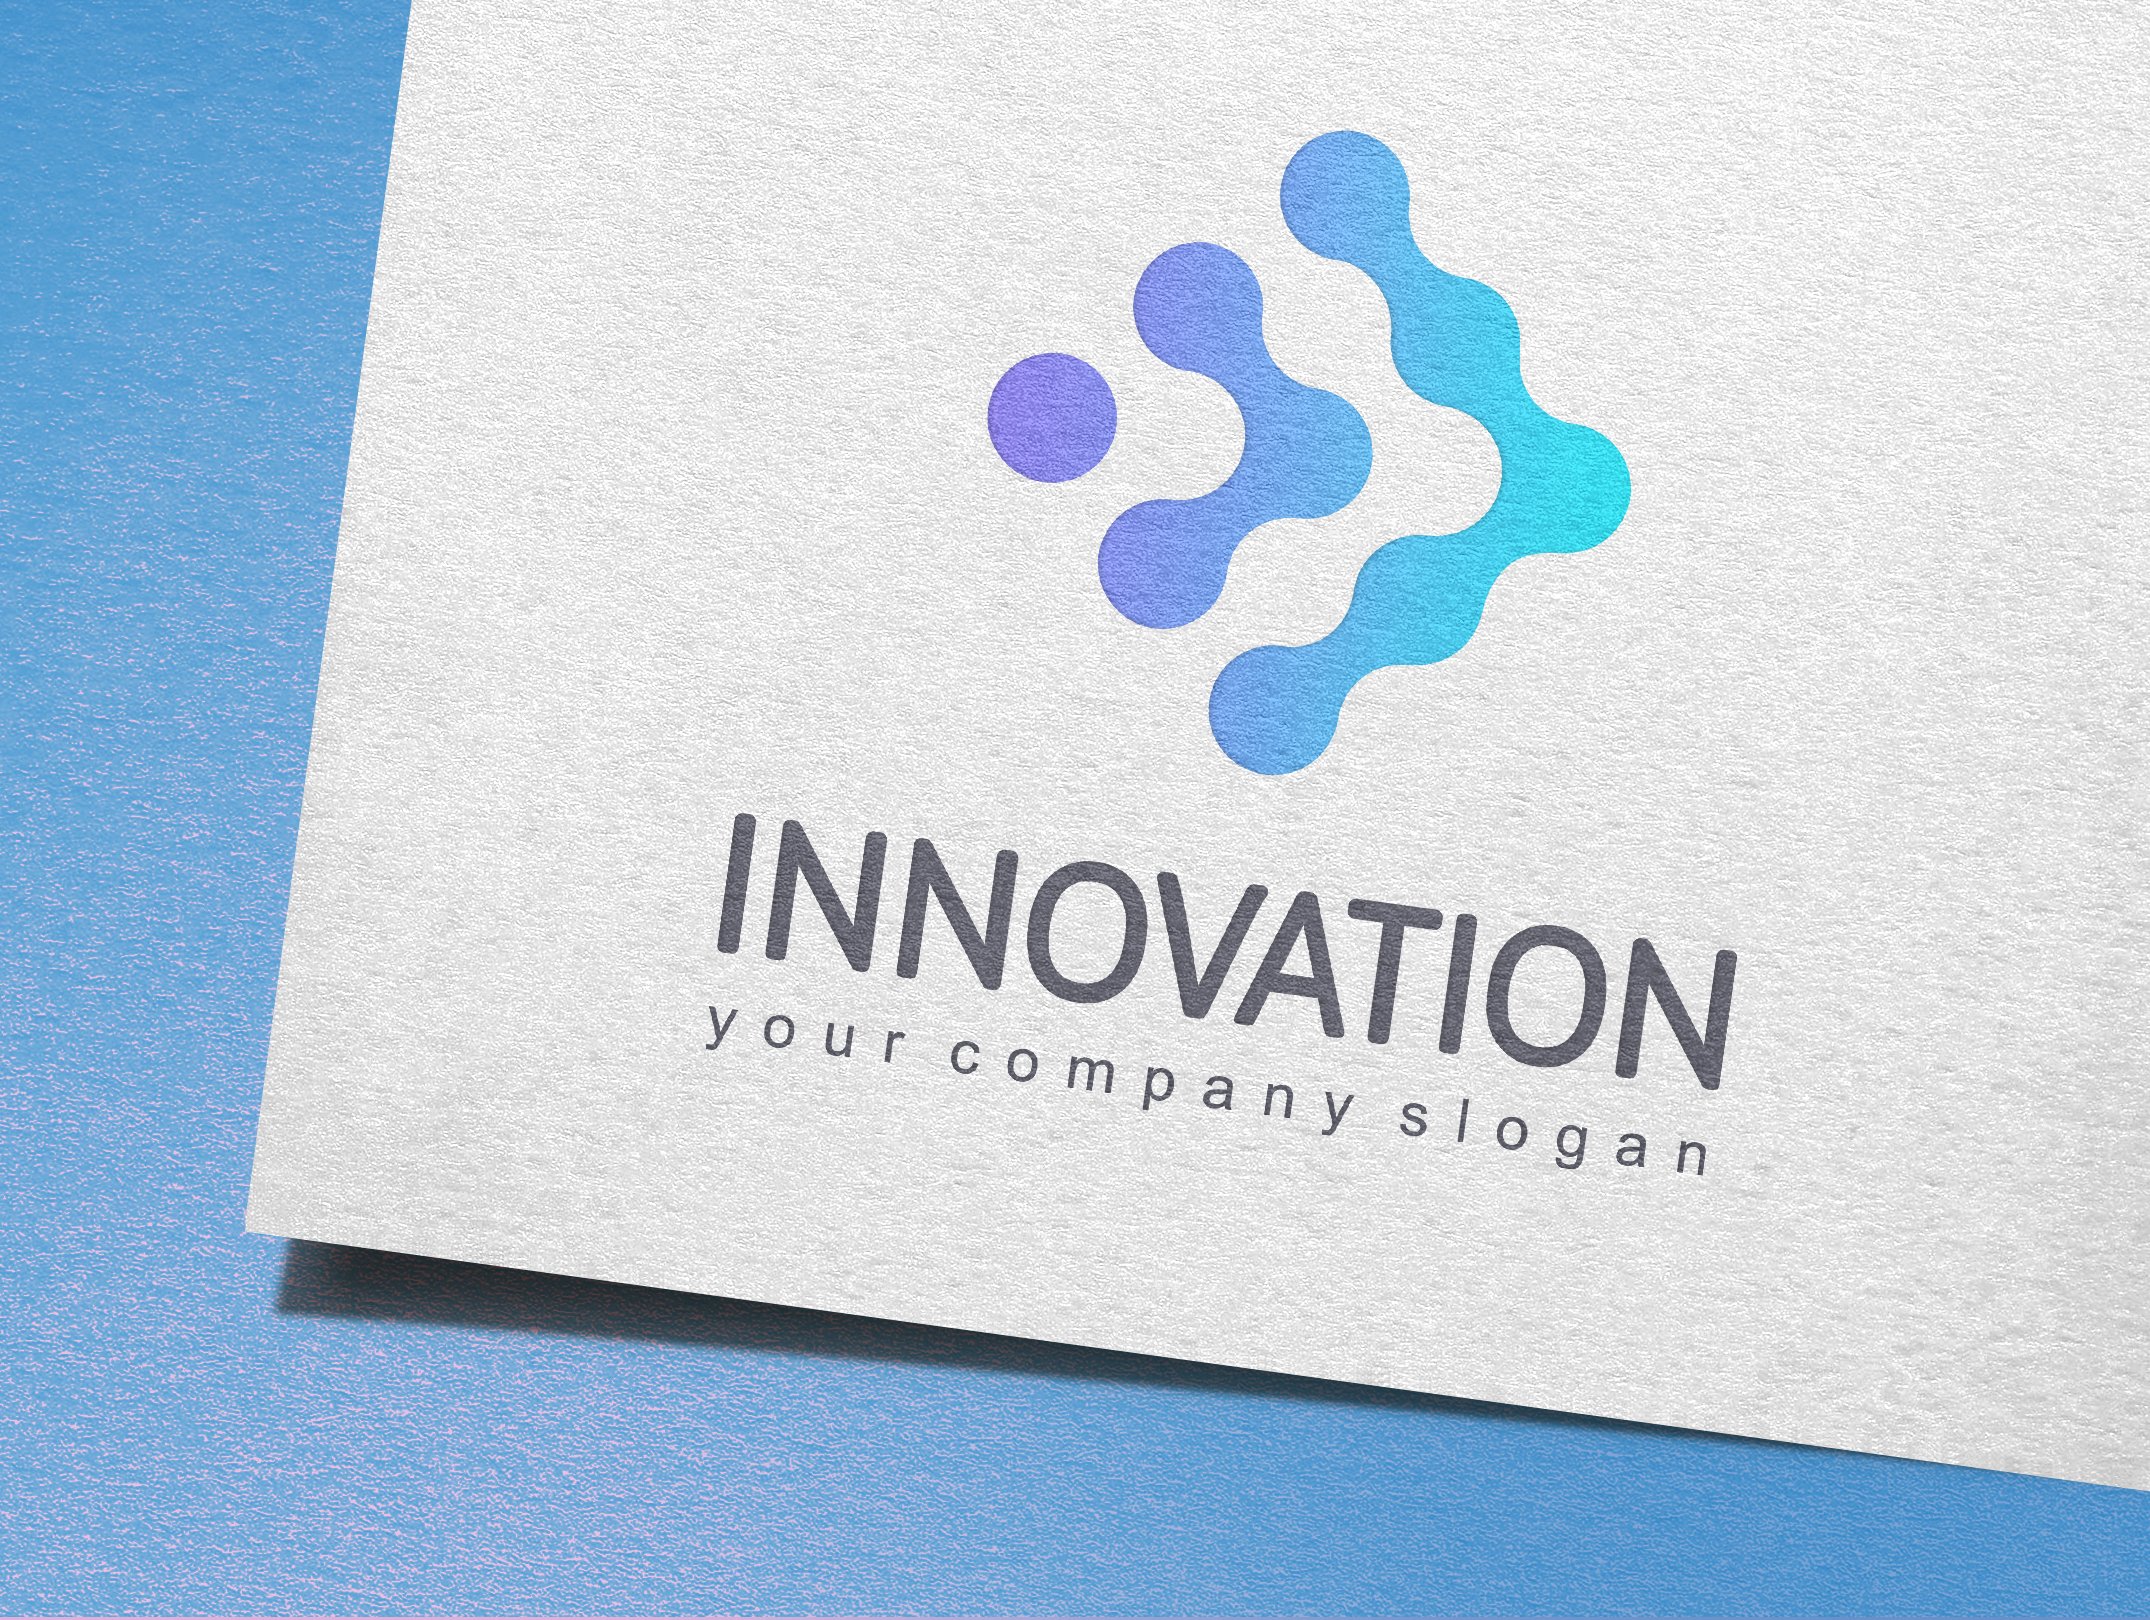 innovation group logo